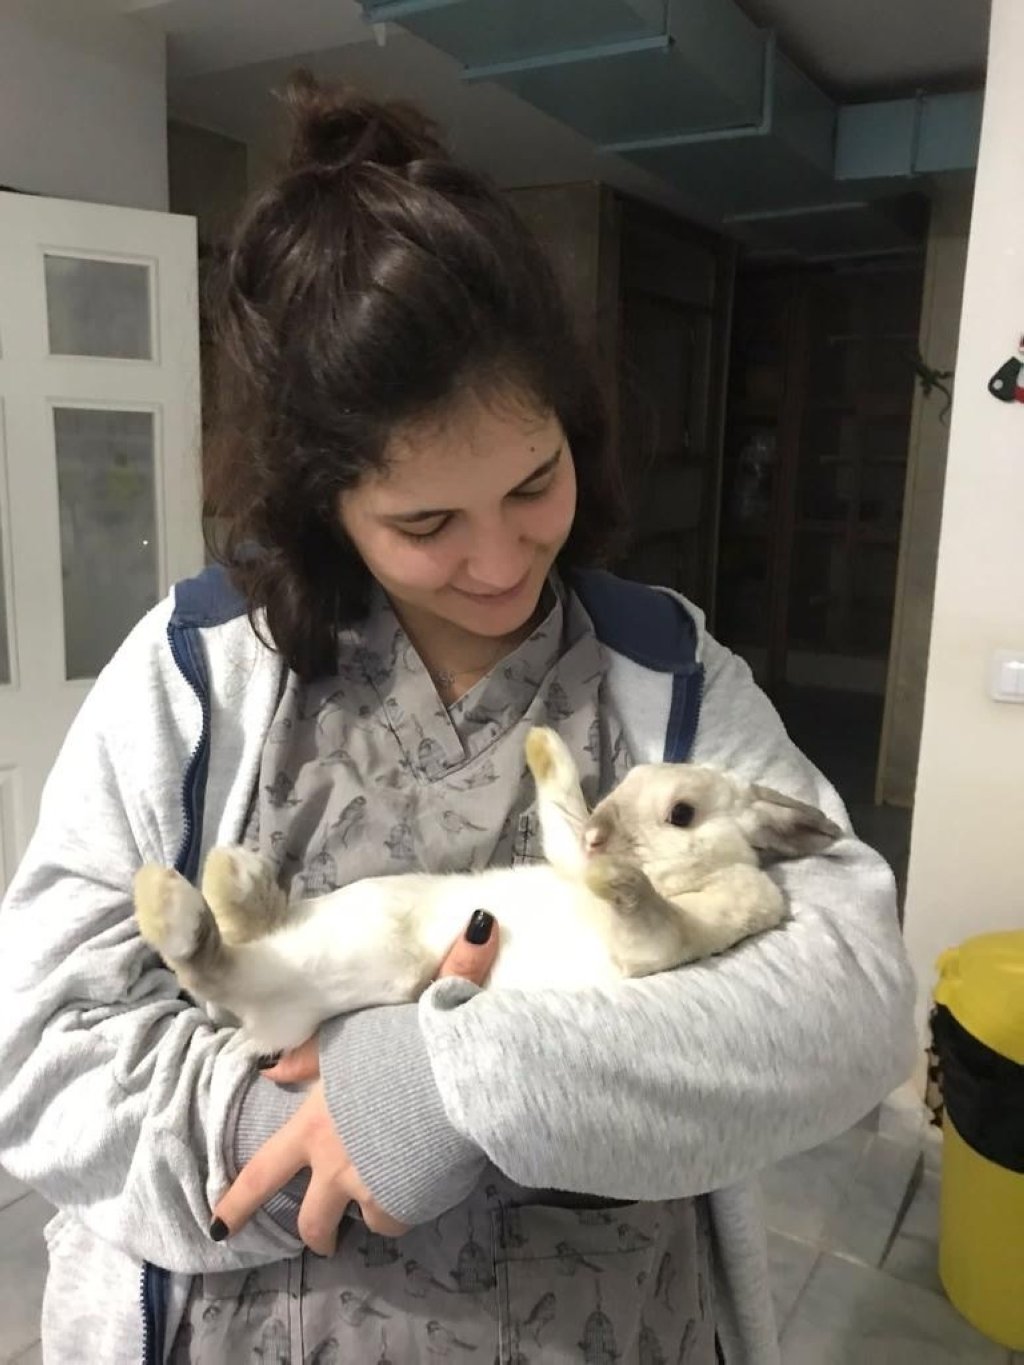 Merve Siirtli, a veterinarian at the exotic animal hospital, with a rabbit, Istanbul, Turkey. (Photo courtesy of hospital)